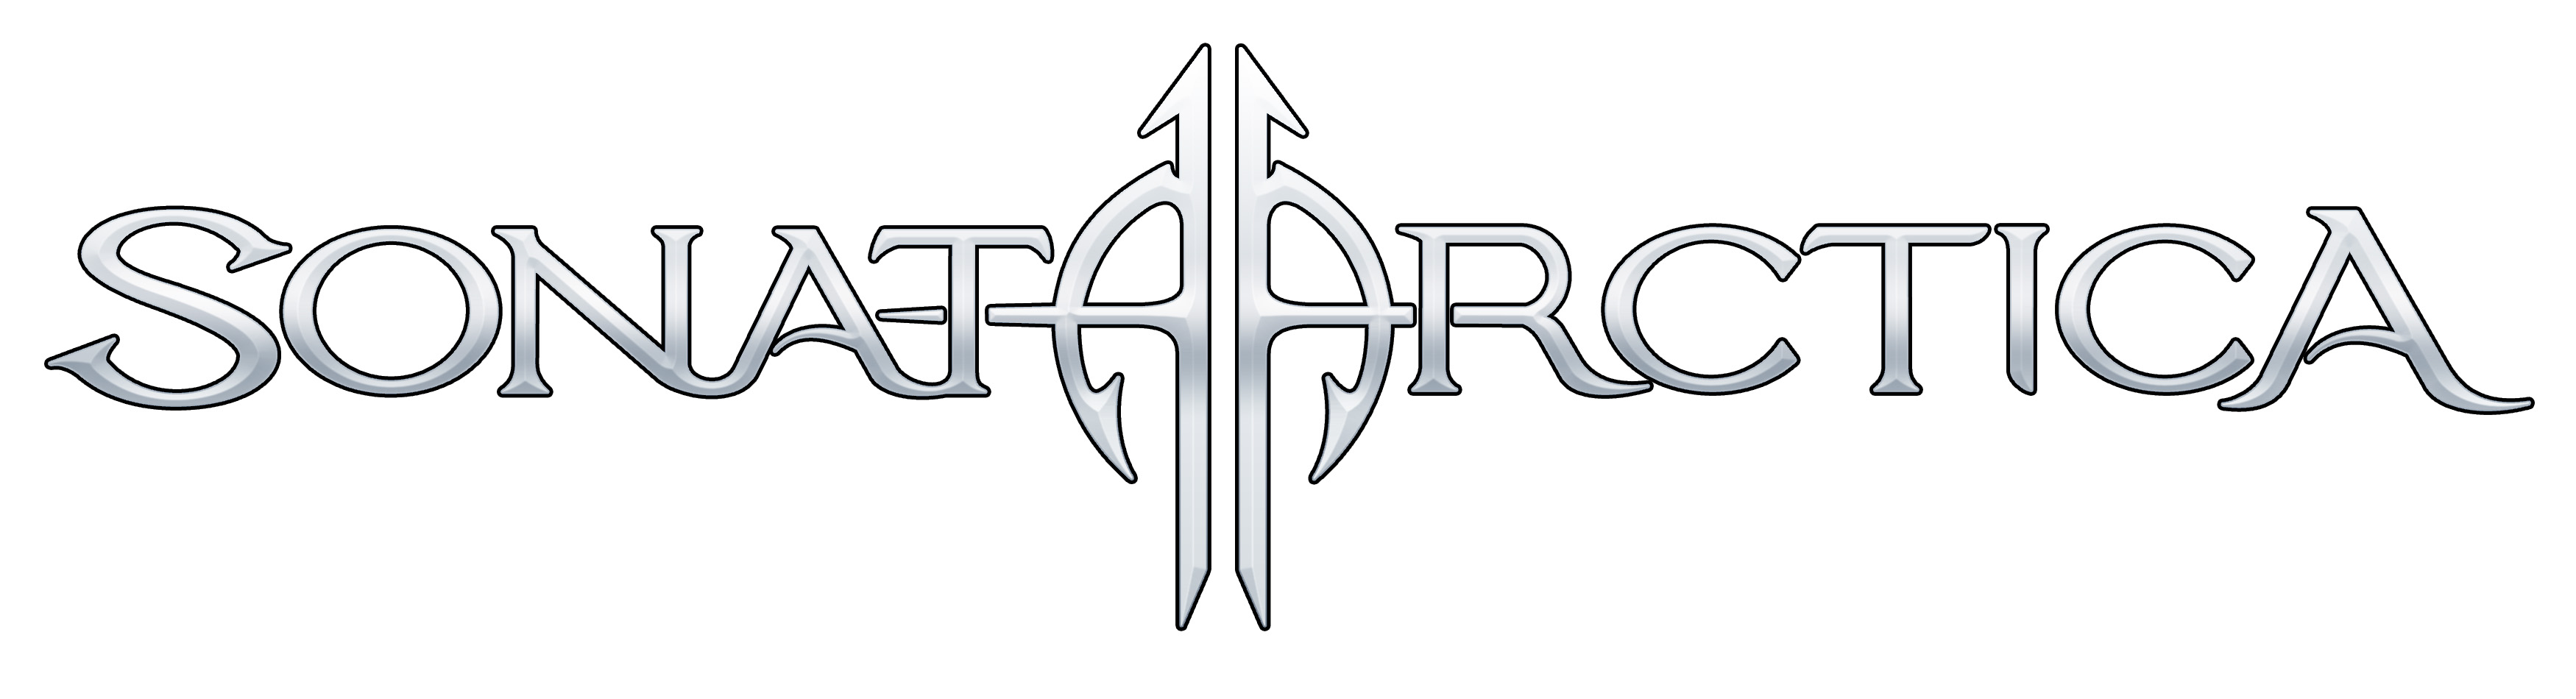 Sonata_Arctica_logo.jpg